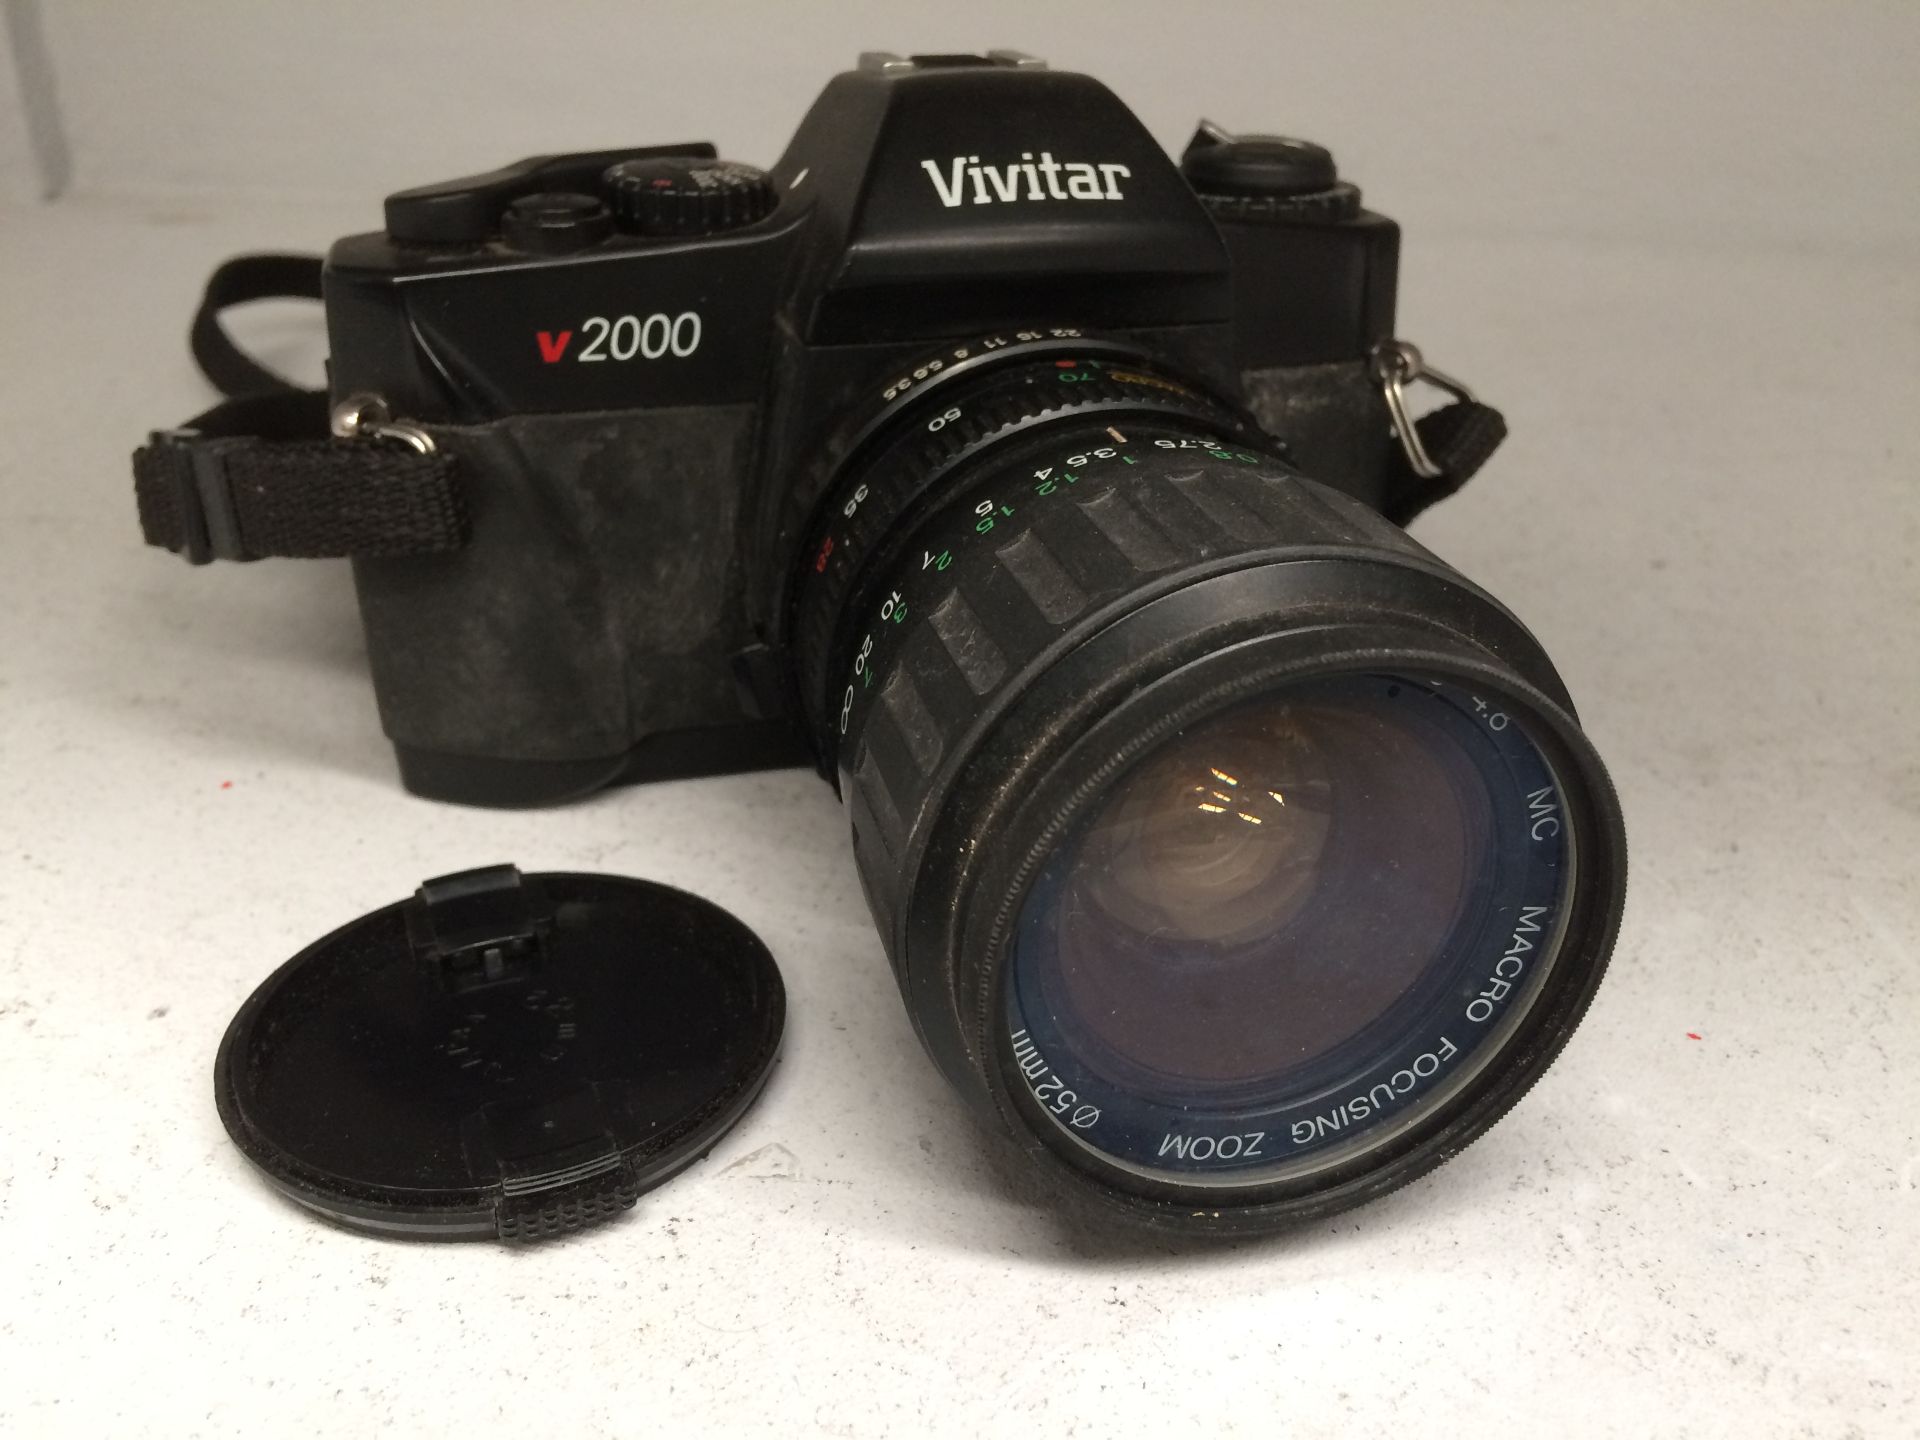 Vivitar V2000 camera with a Macro focusing zoom 28-70mm lens